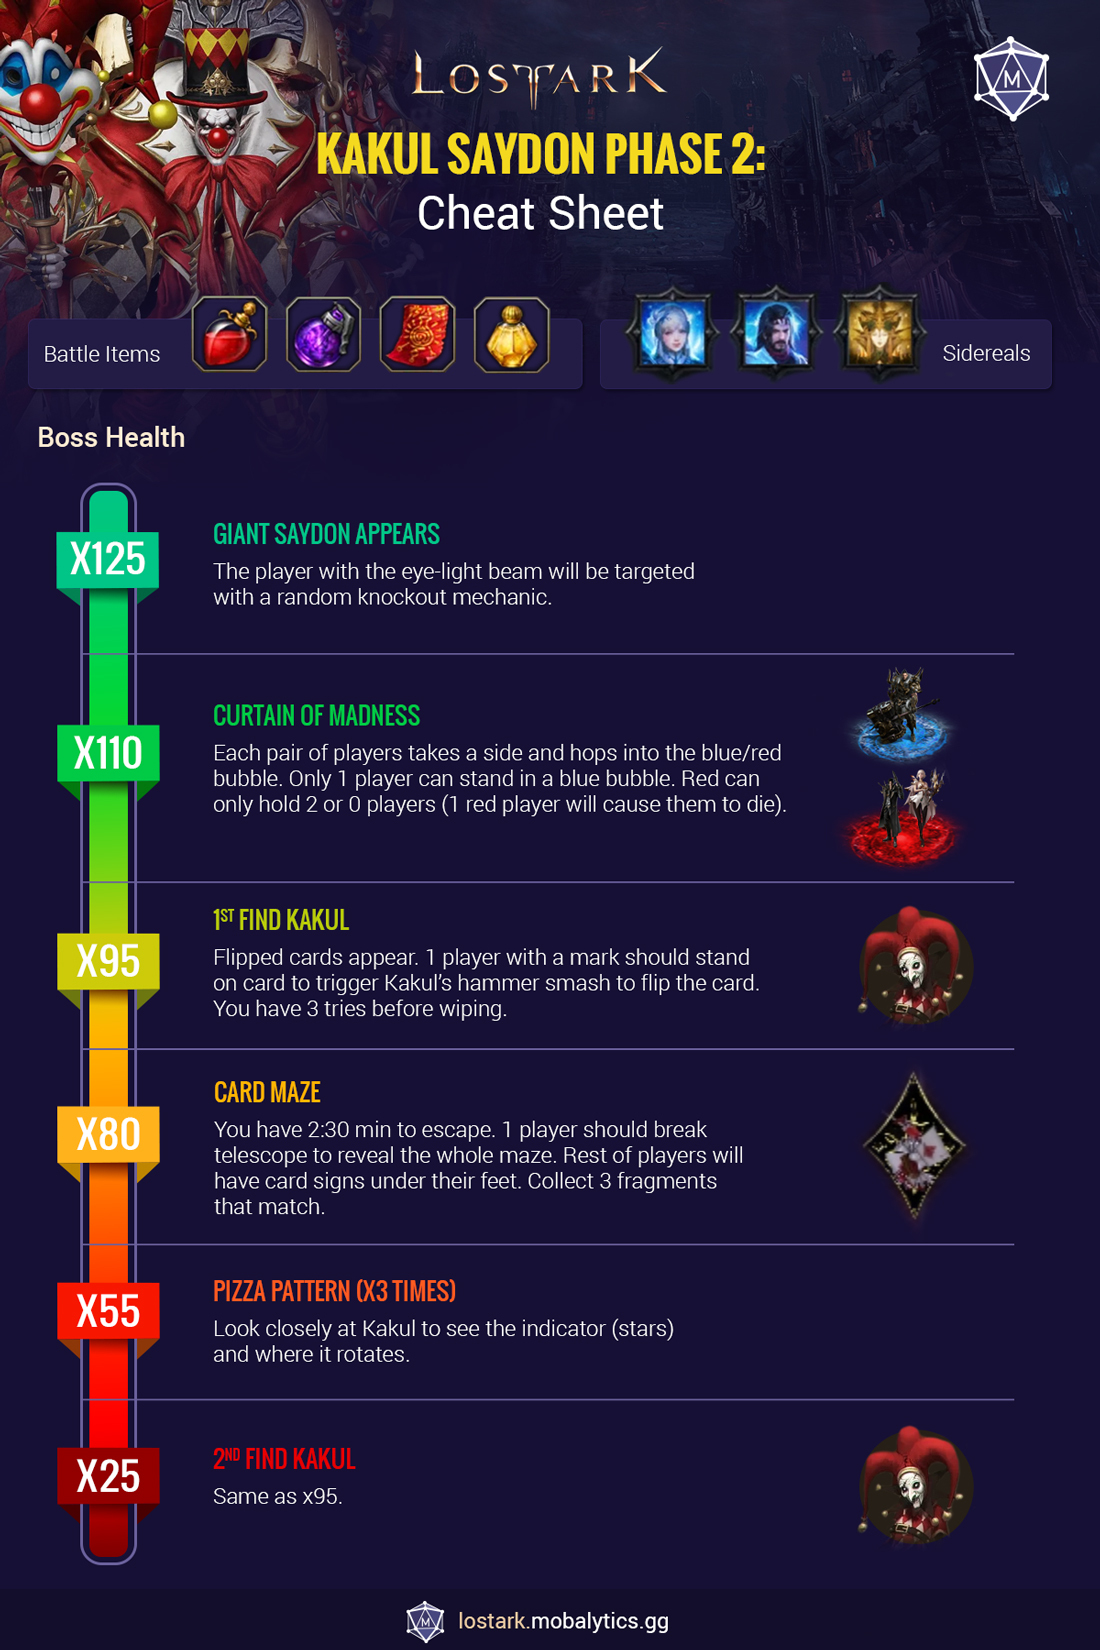 Kakul-Saydon Phase 2 Cheat Sheet Infographic